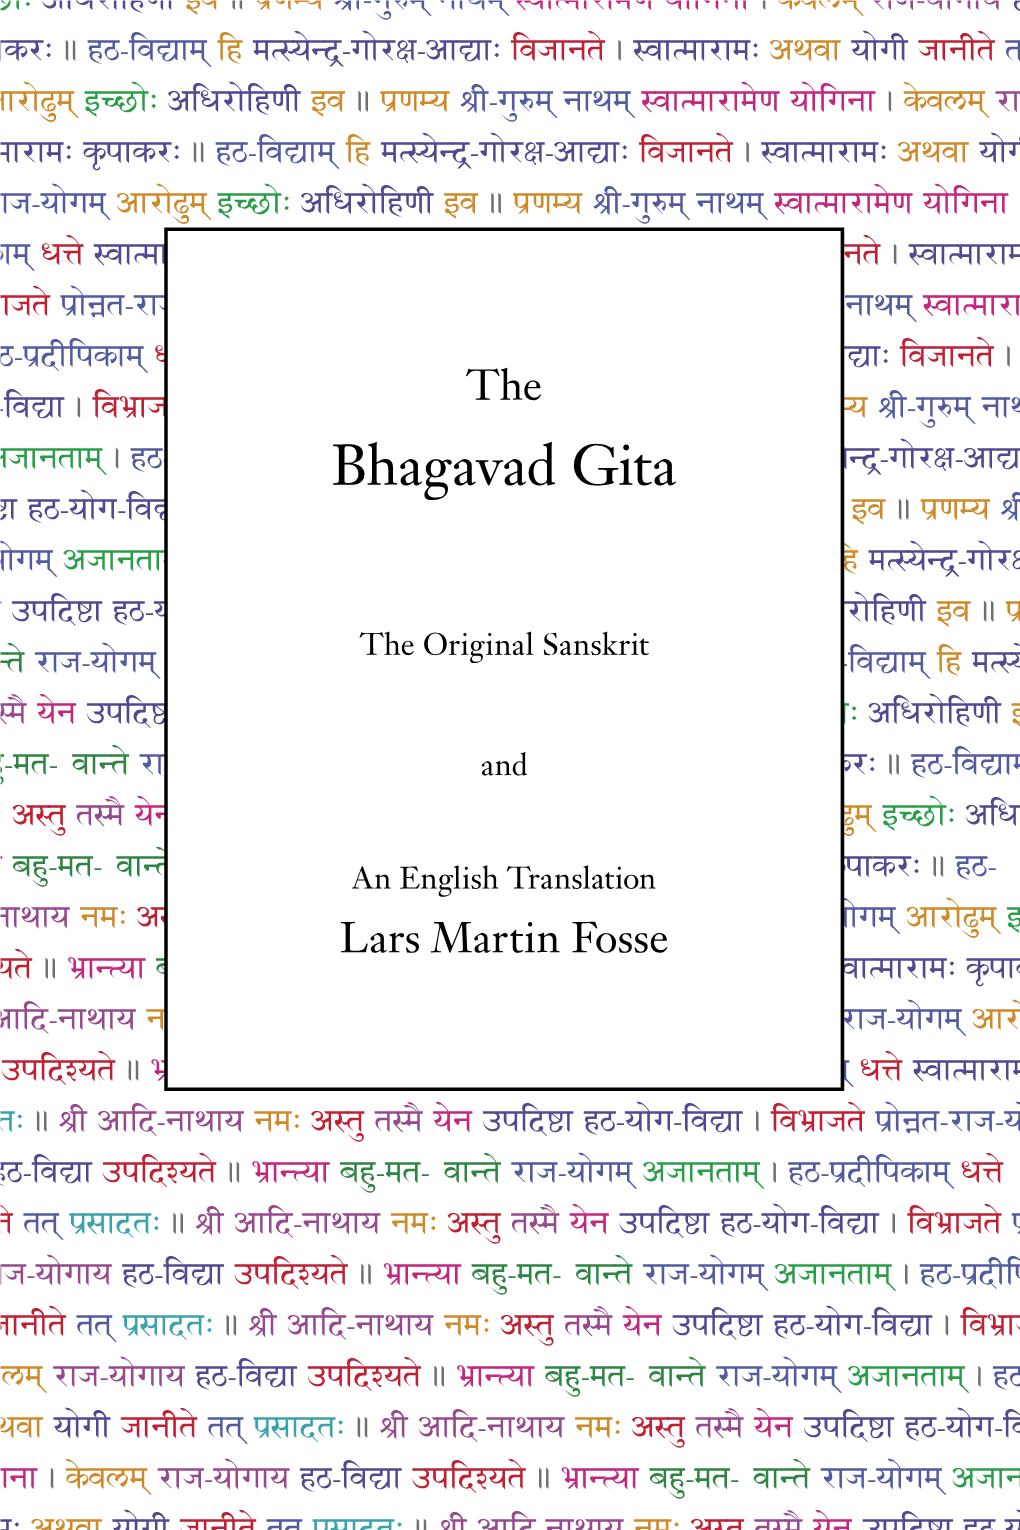 Bhagavad Gita the Bhagavad Gita